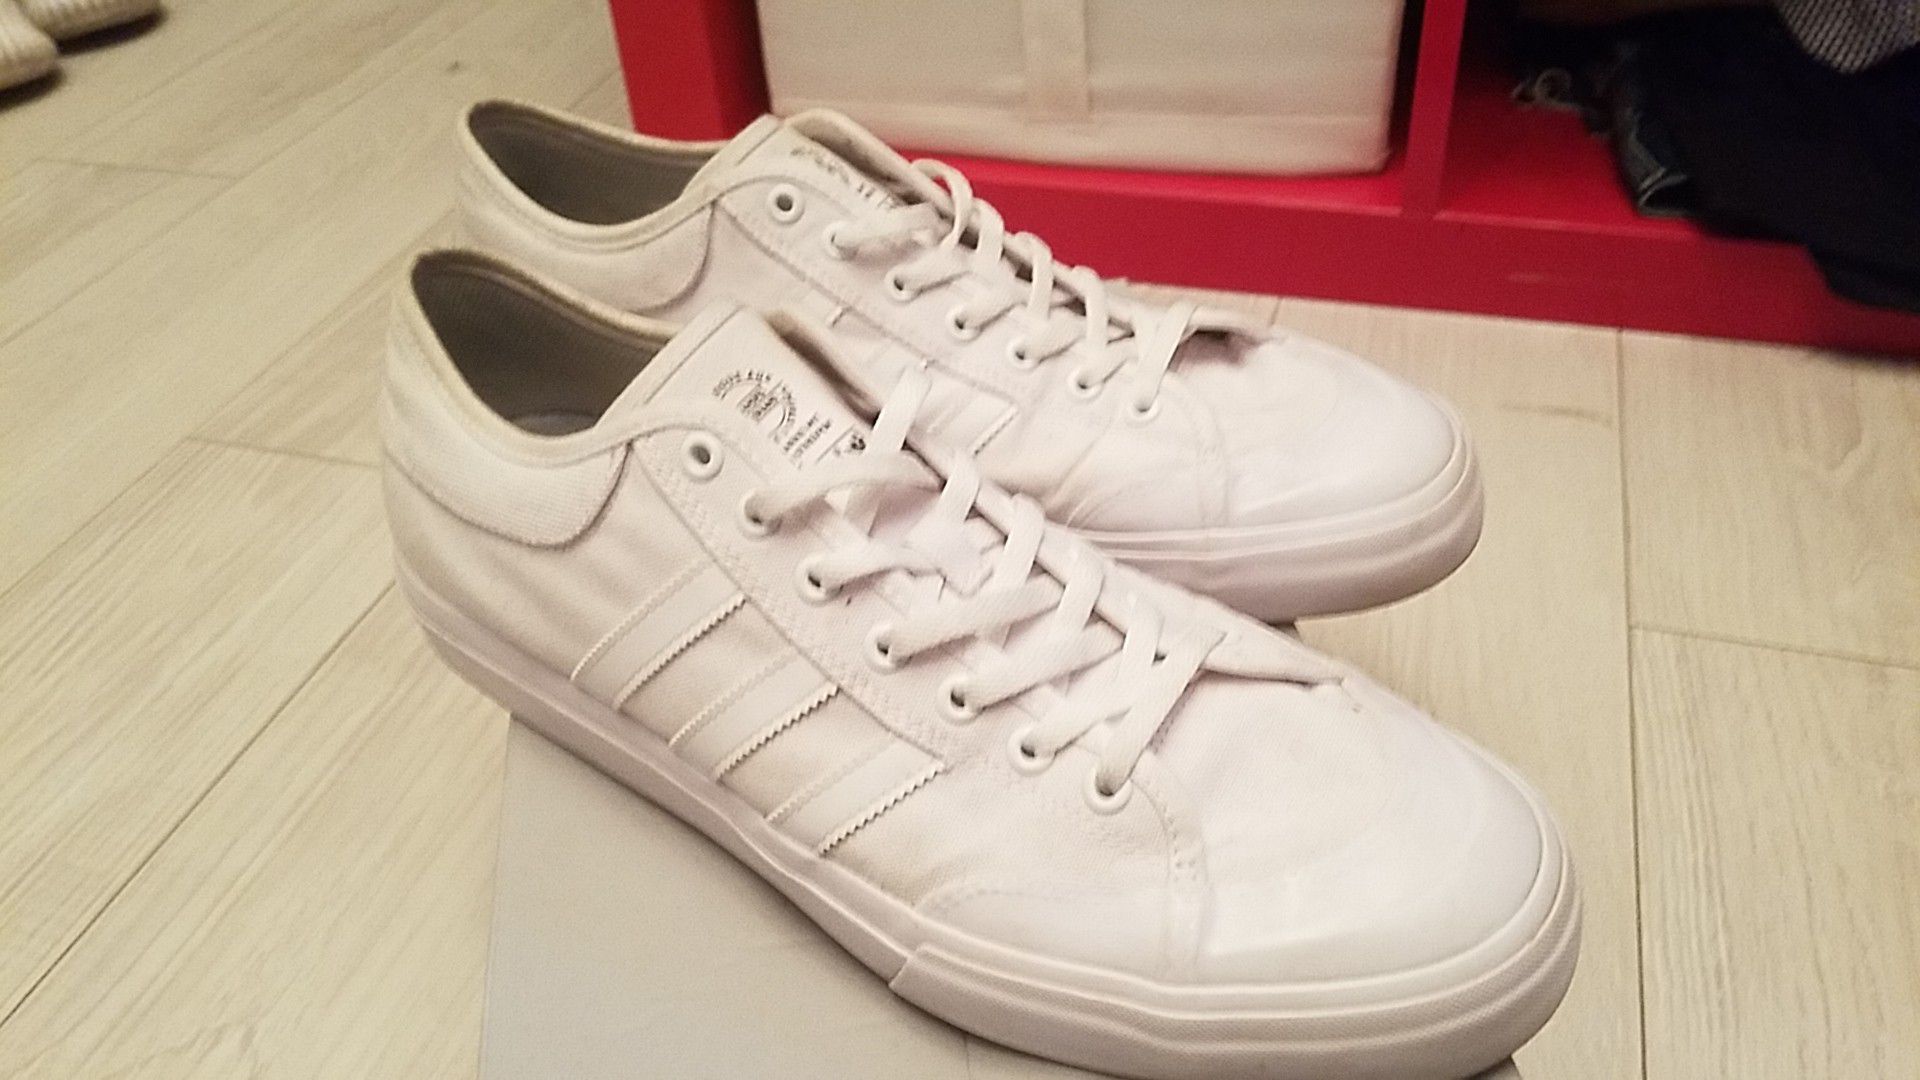 12" Adidas all white skateboarding sneakers size 12 men